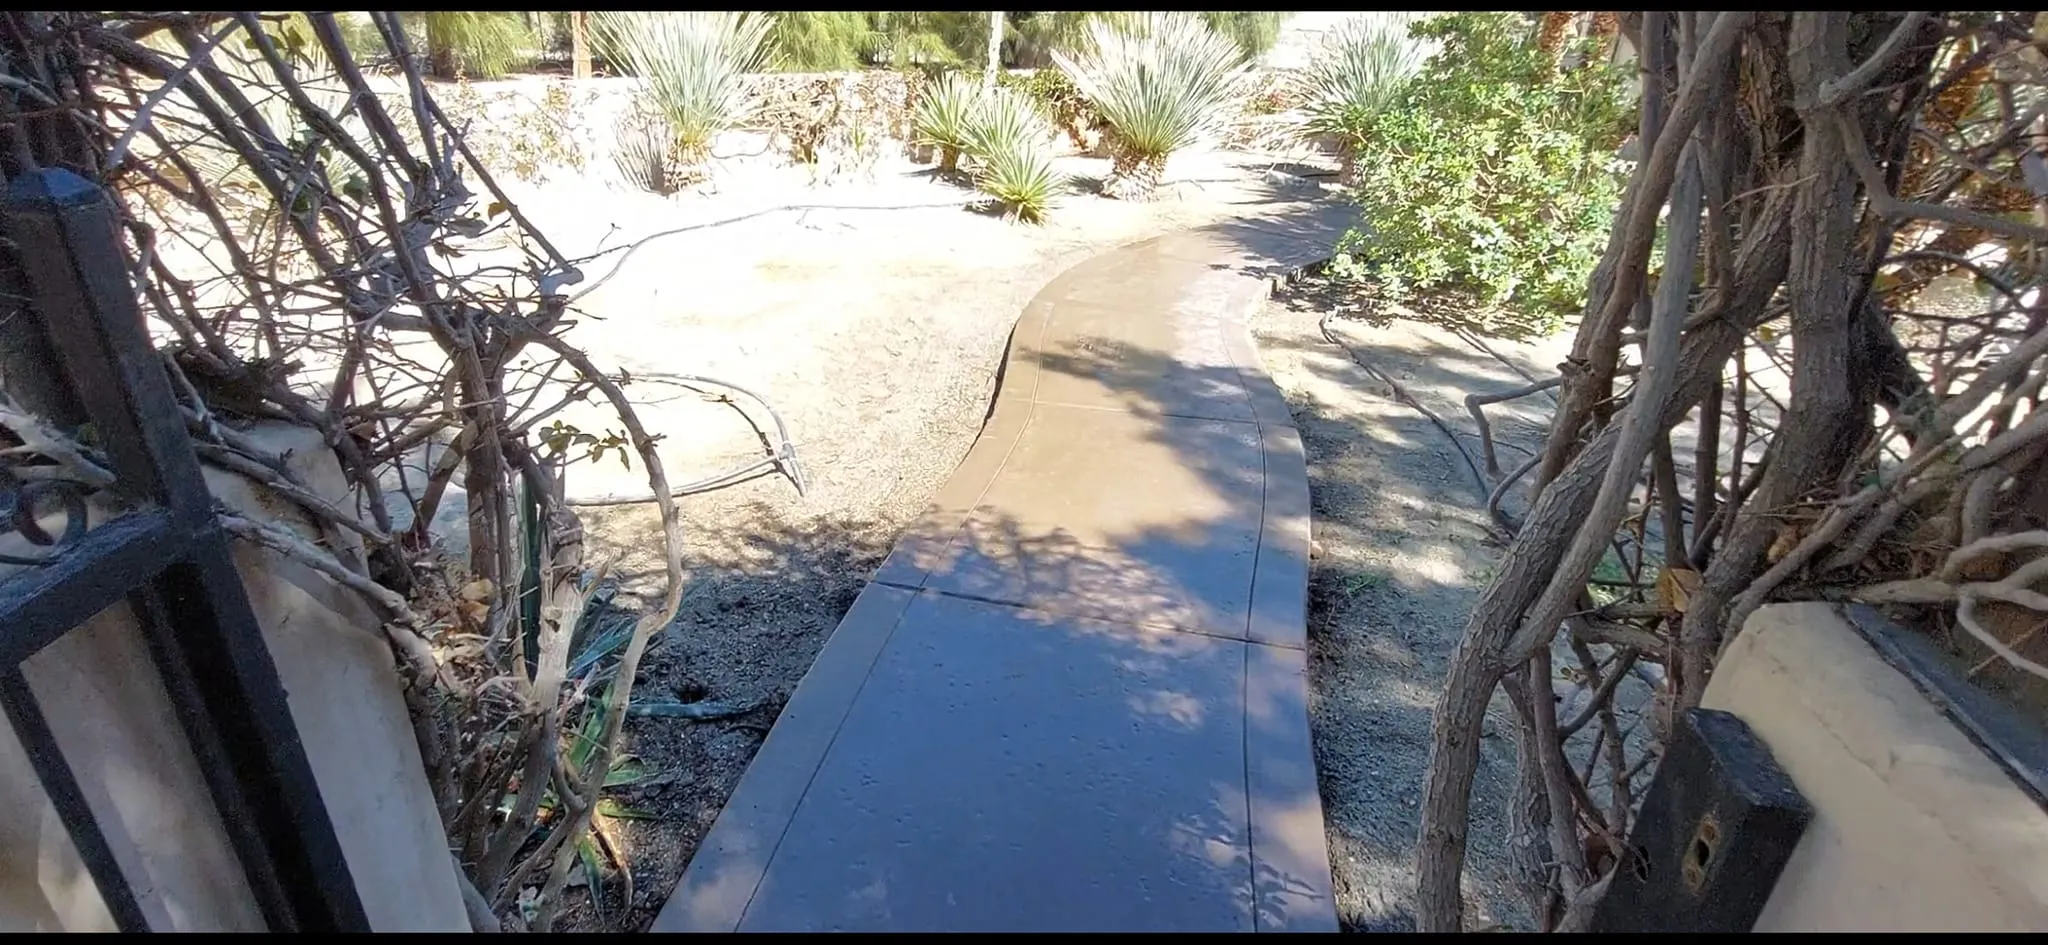 Landscaping for EG Landscape in Coachella Valley, CA